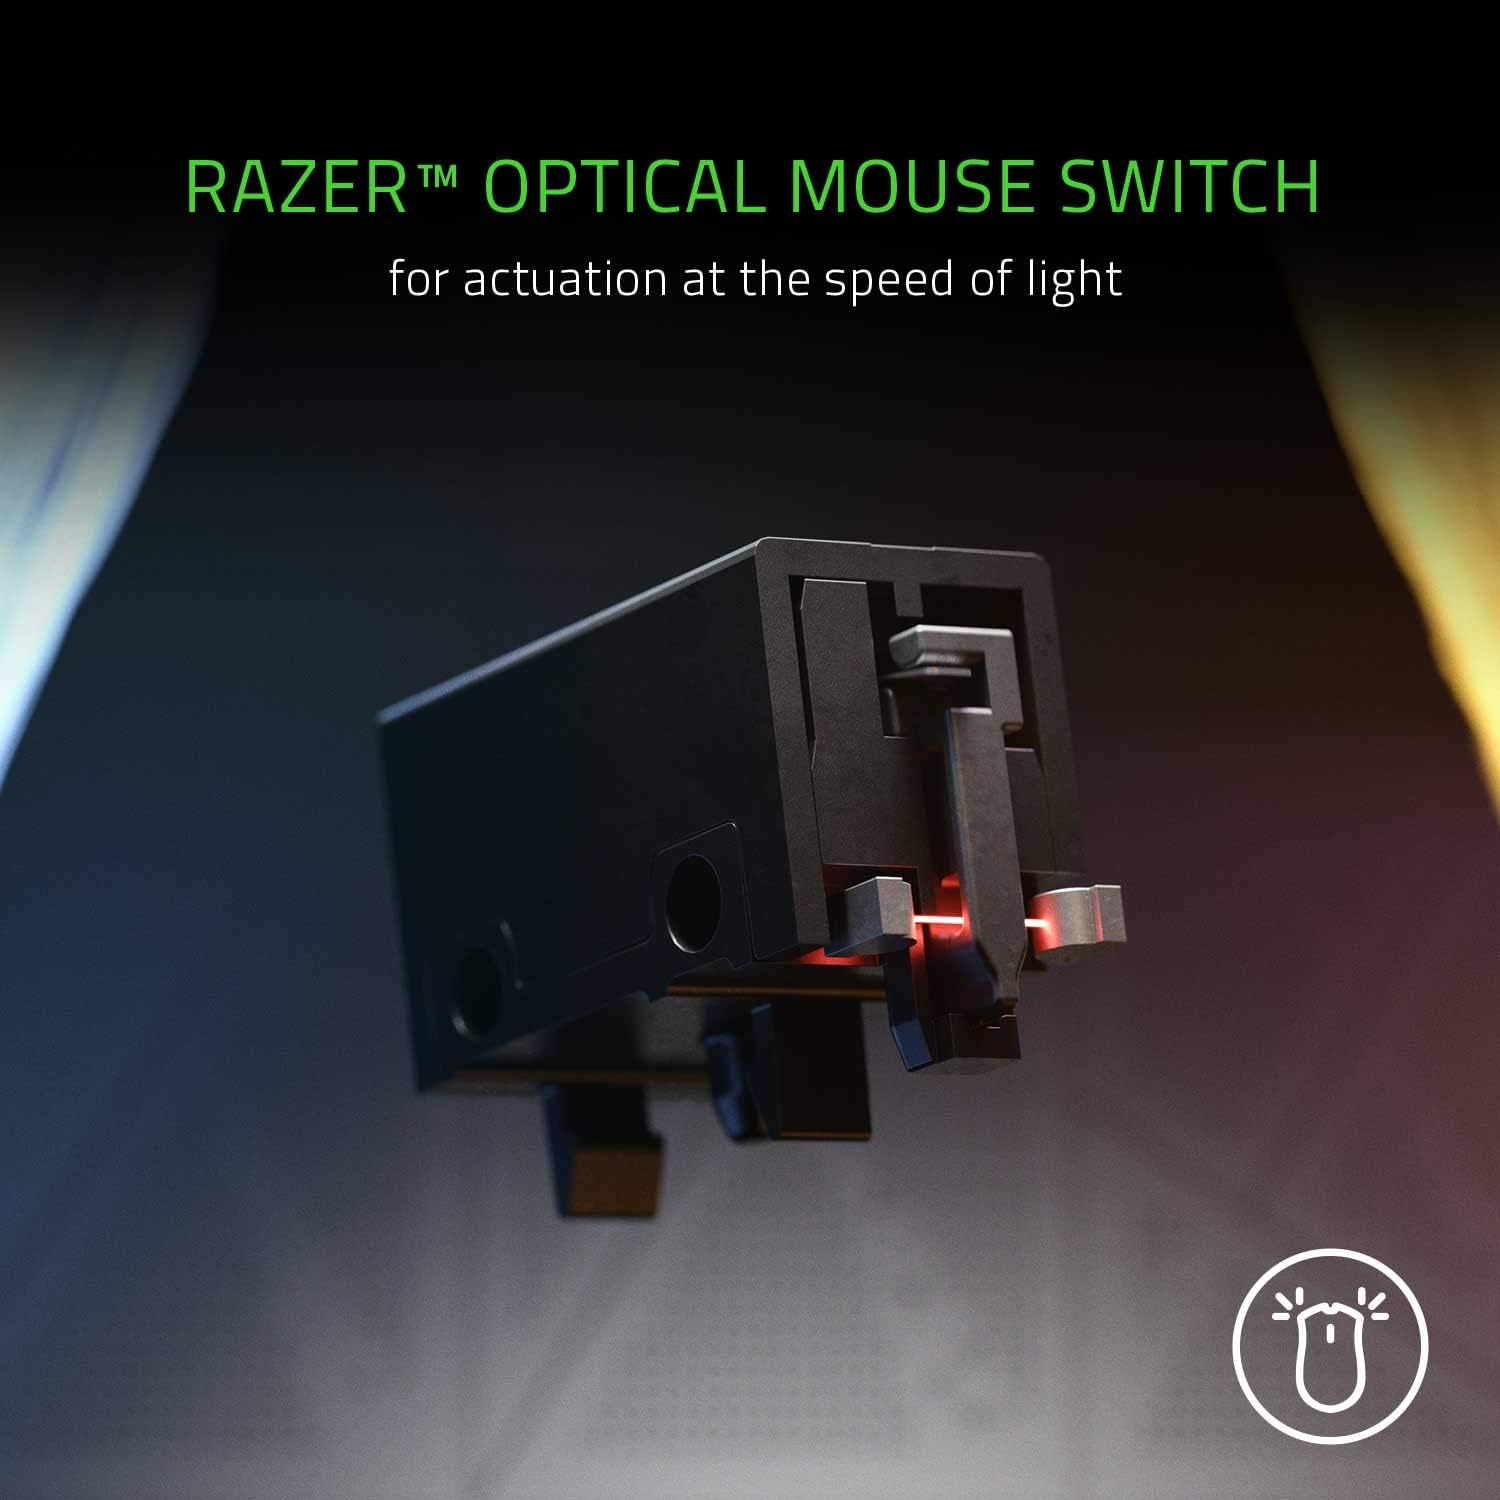 Razer DeathAdder V2 Mini Gaming Mouse - Customizable Chroma RGB Lighting with 16.8 million colors. 8886419332954